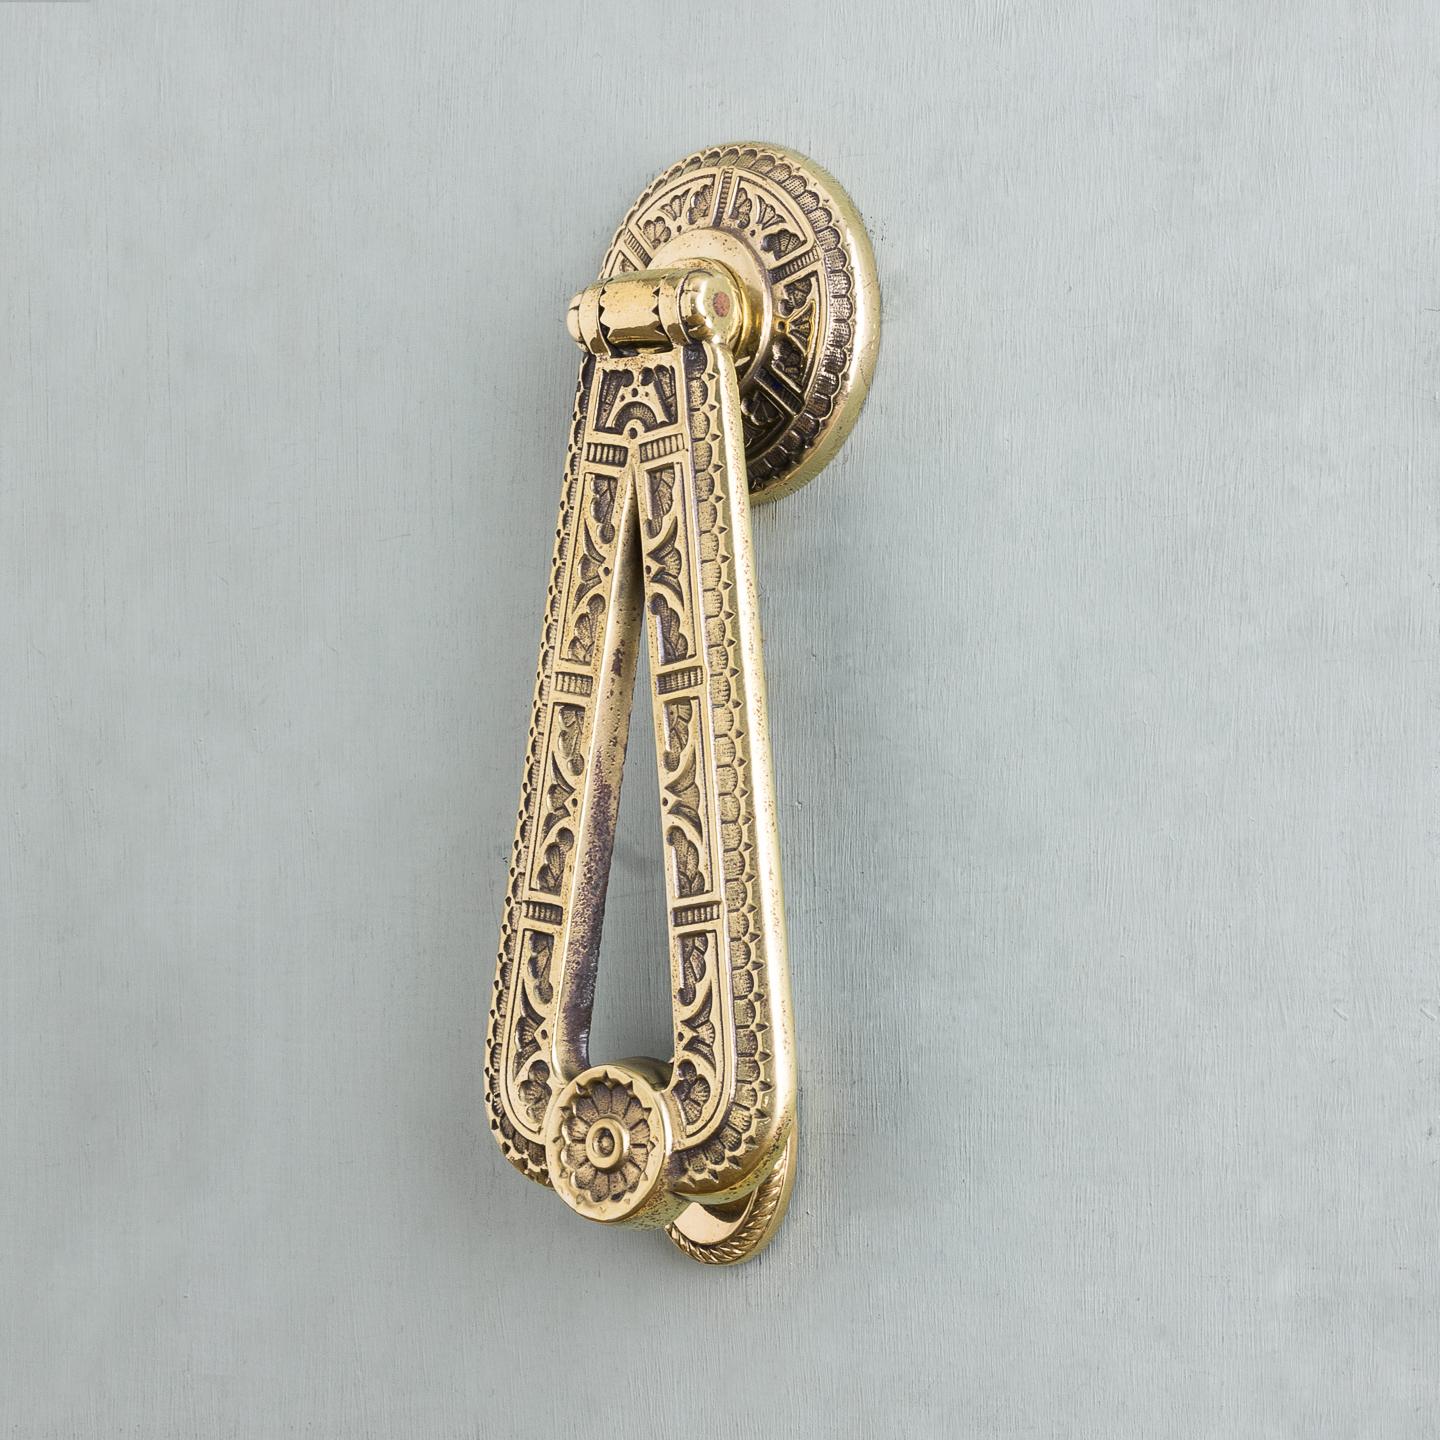 A Victorian Aesthetic period brass door knocker with associated striking plate, circa 1870-1880.